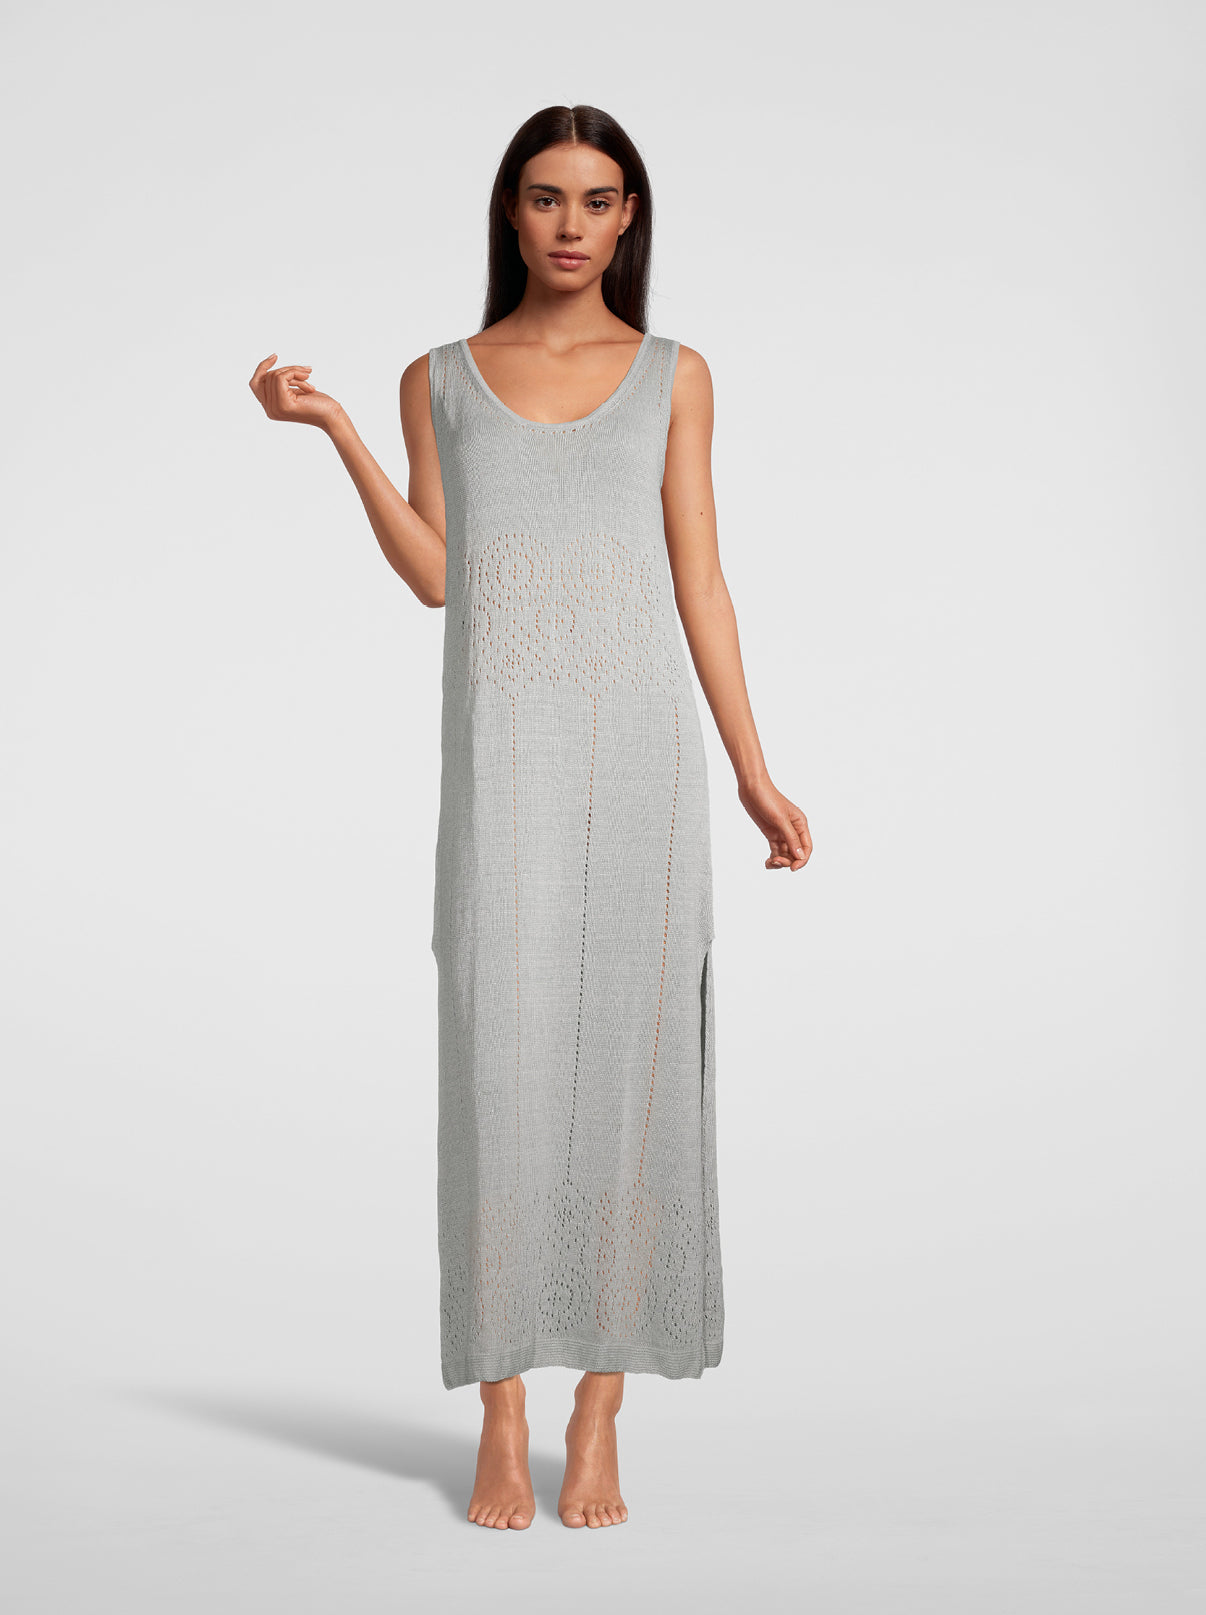 Sleeveless Long Dress knit in pure linen 6588 - Oscalito